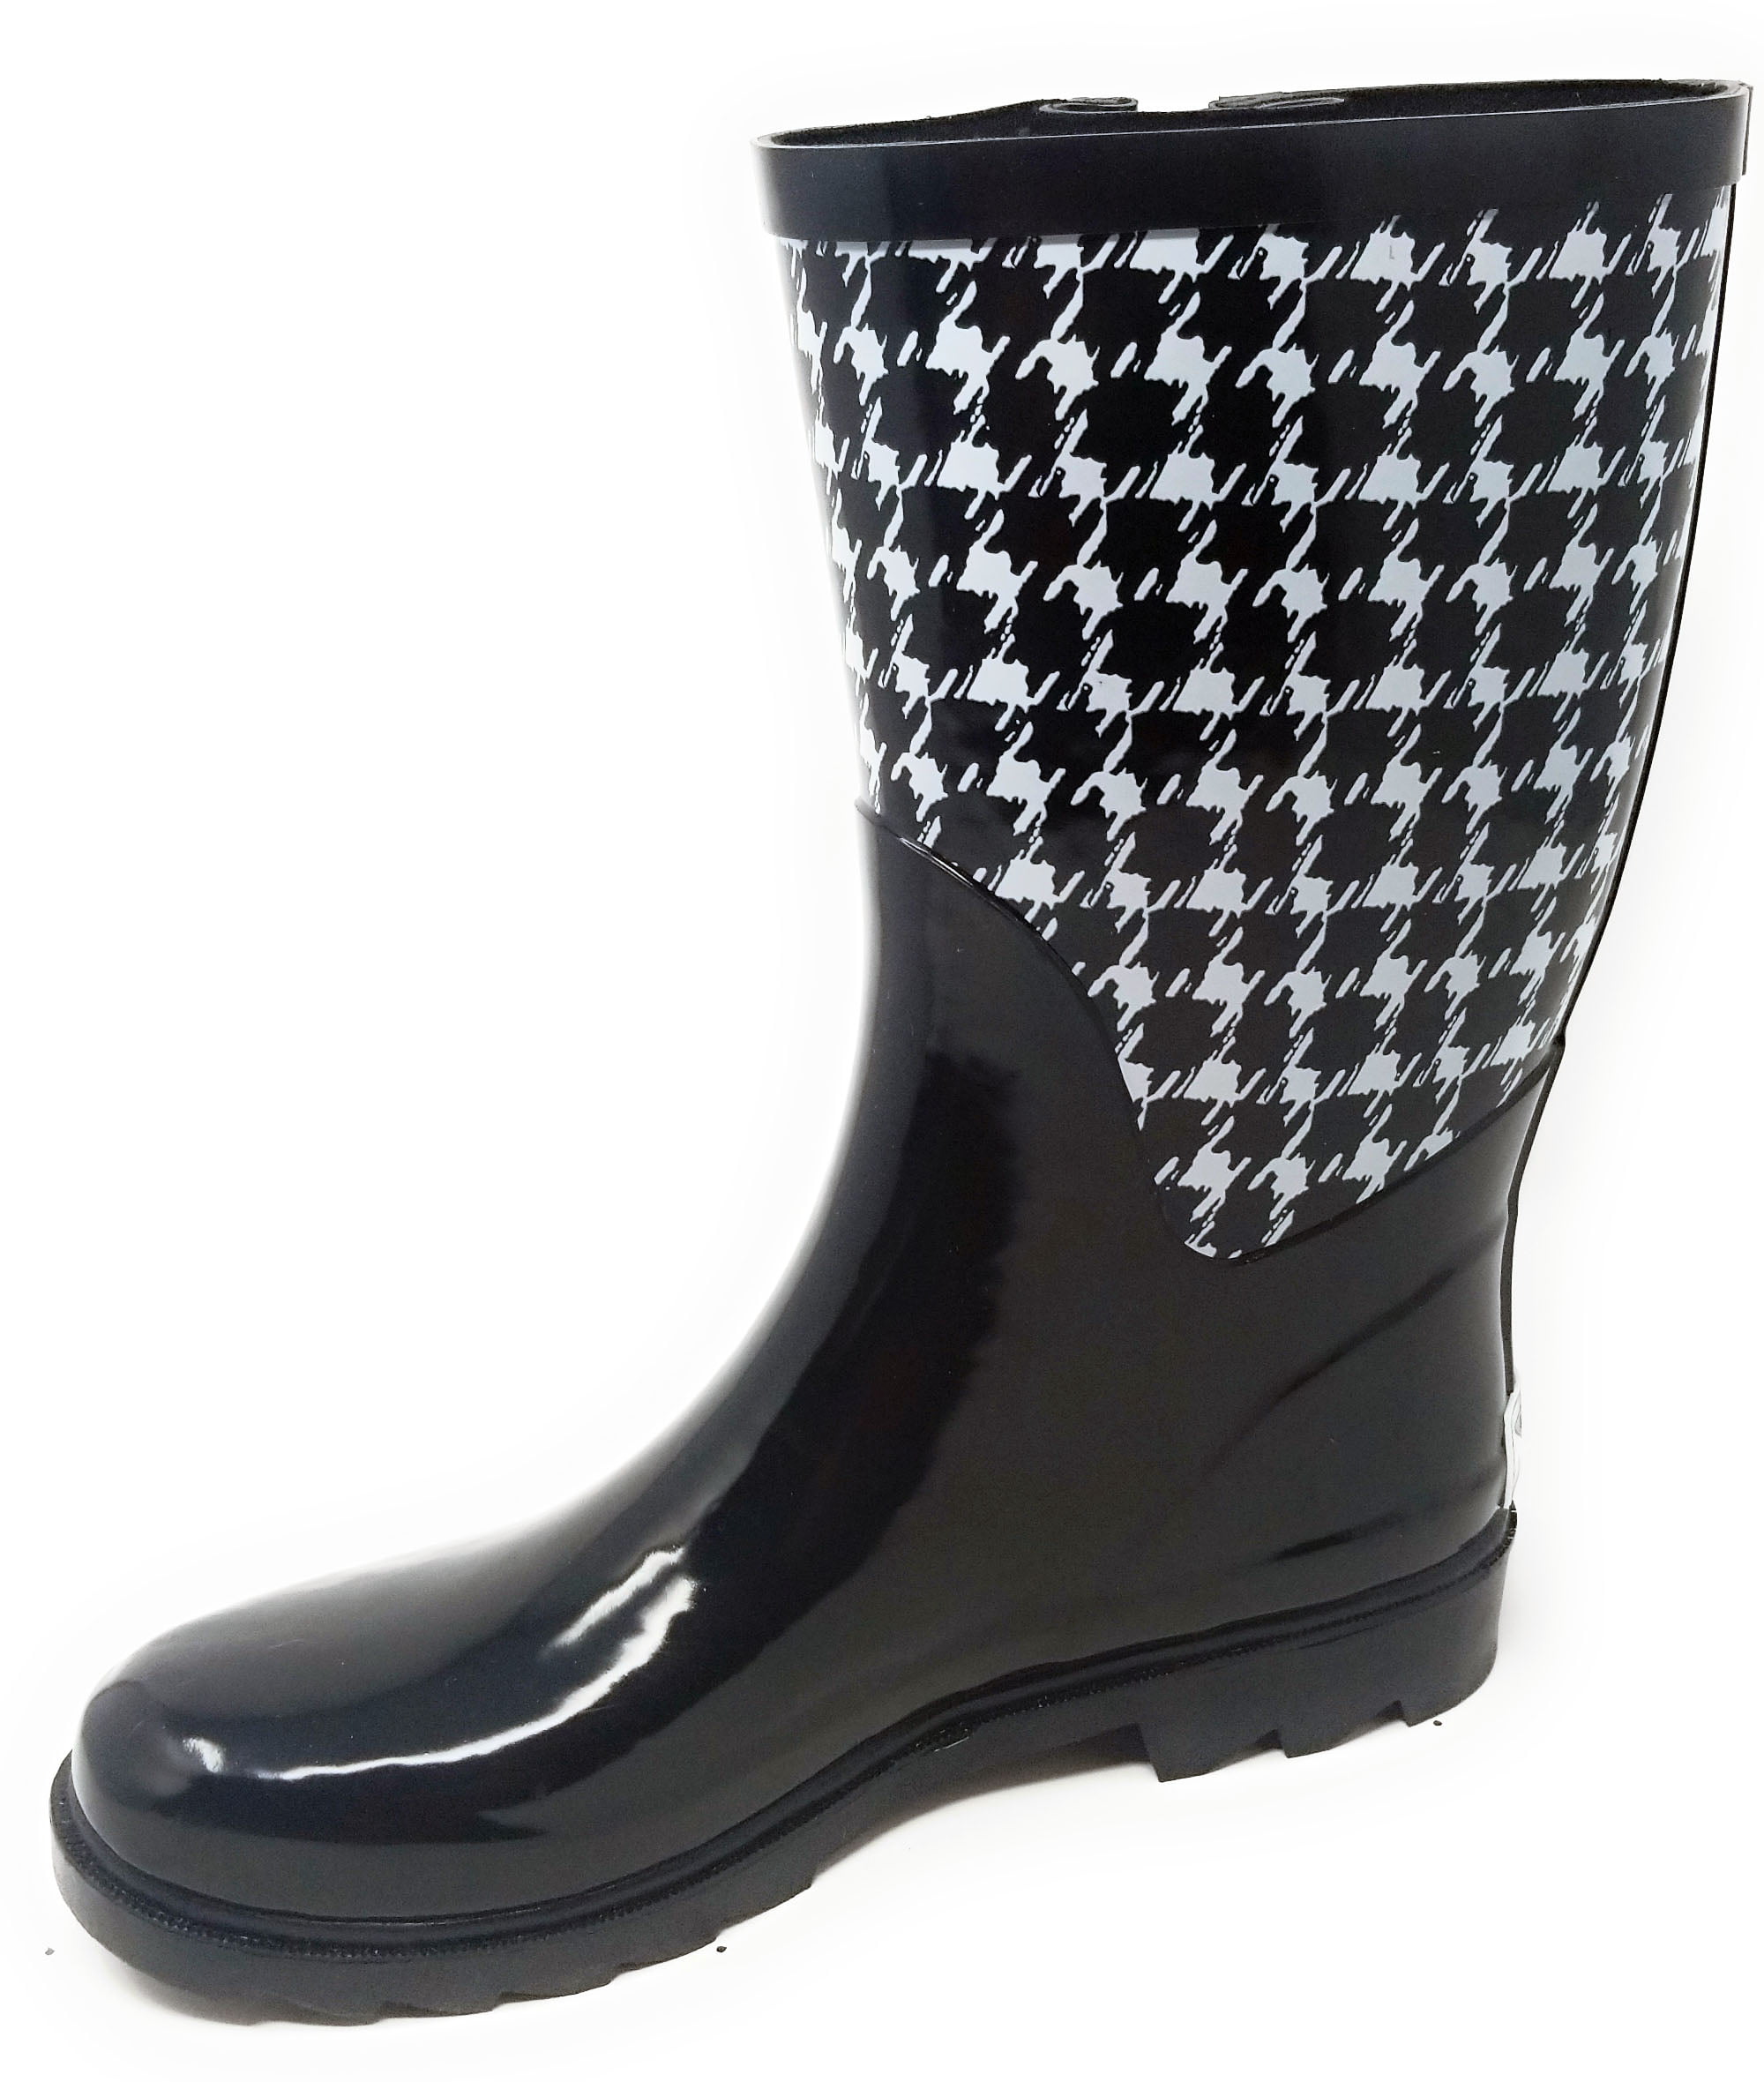 women's rain boots size 7